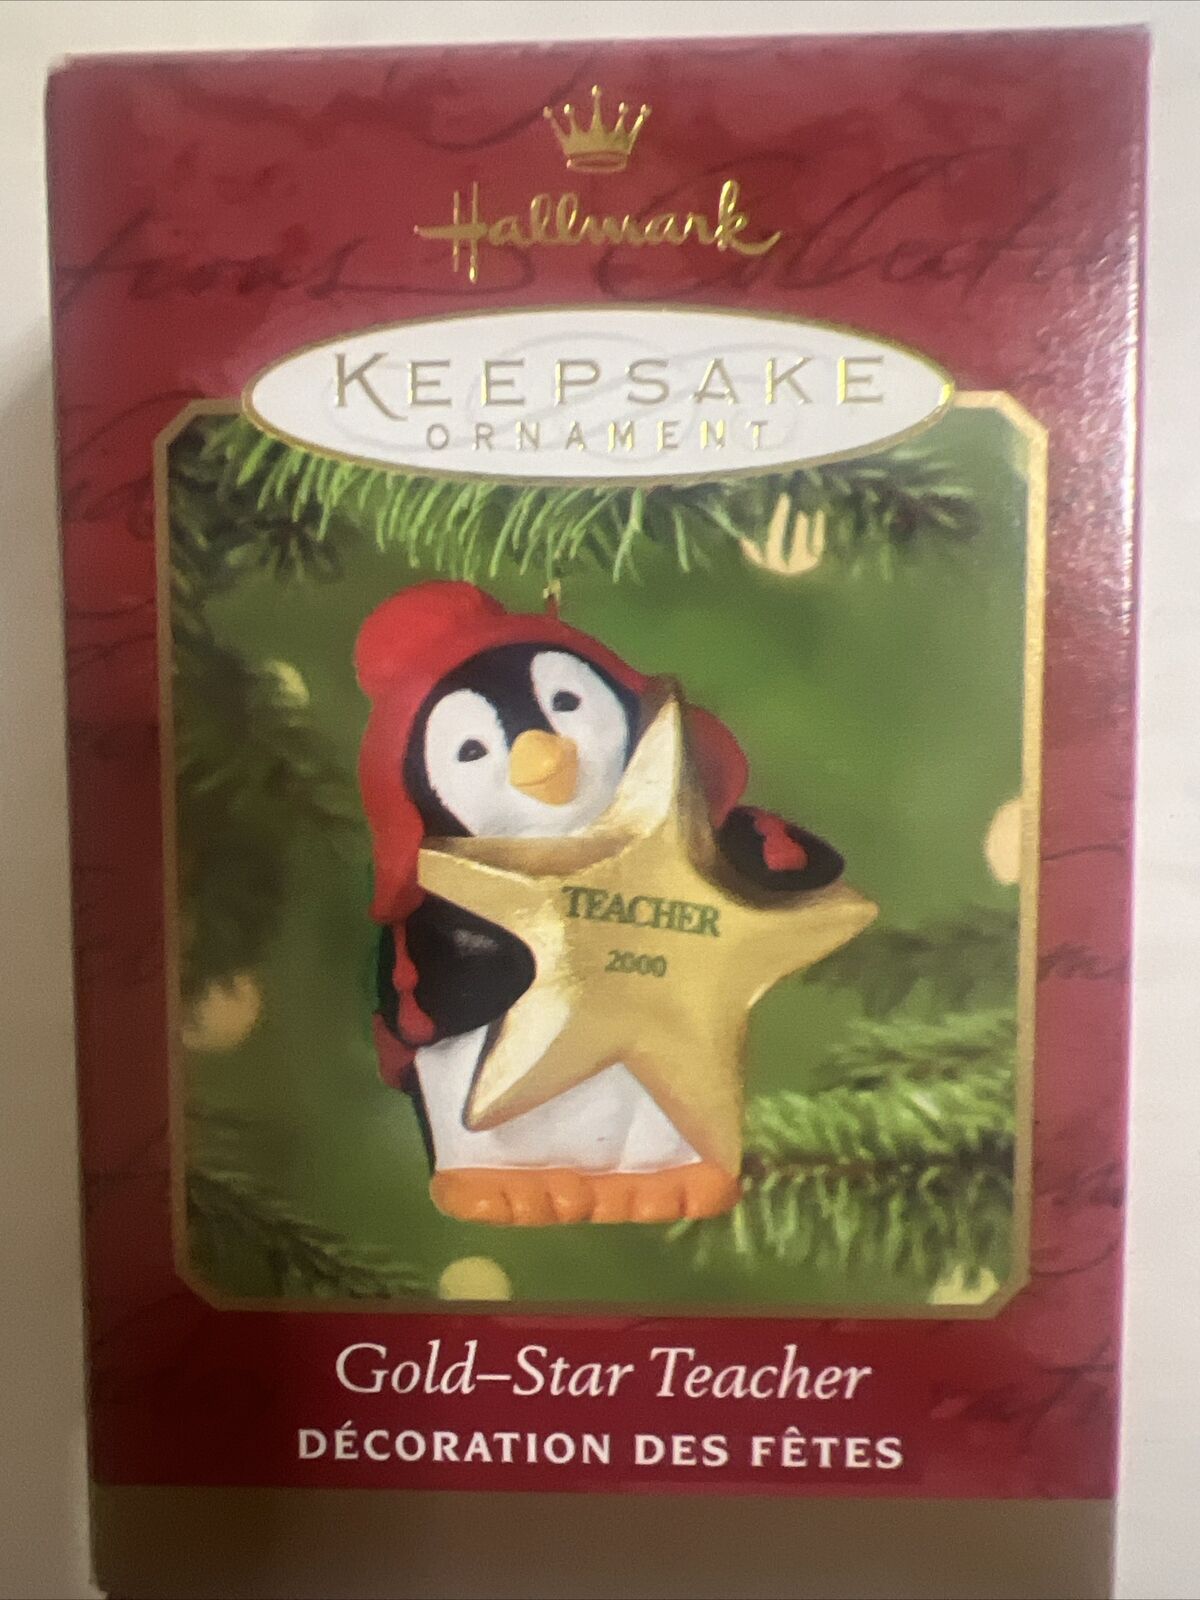 Hallmark Keepsake Ornament, Gold-Star Teacher 2000, Collectible Penguin w/ Star